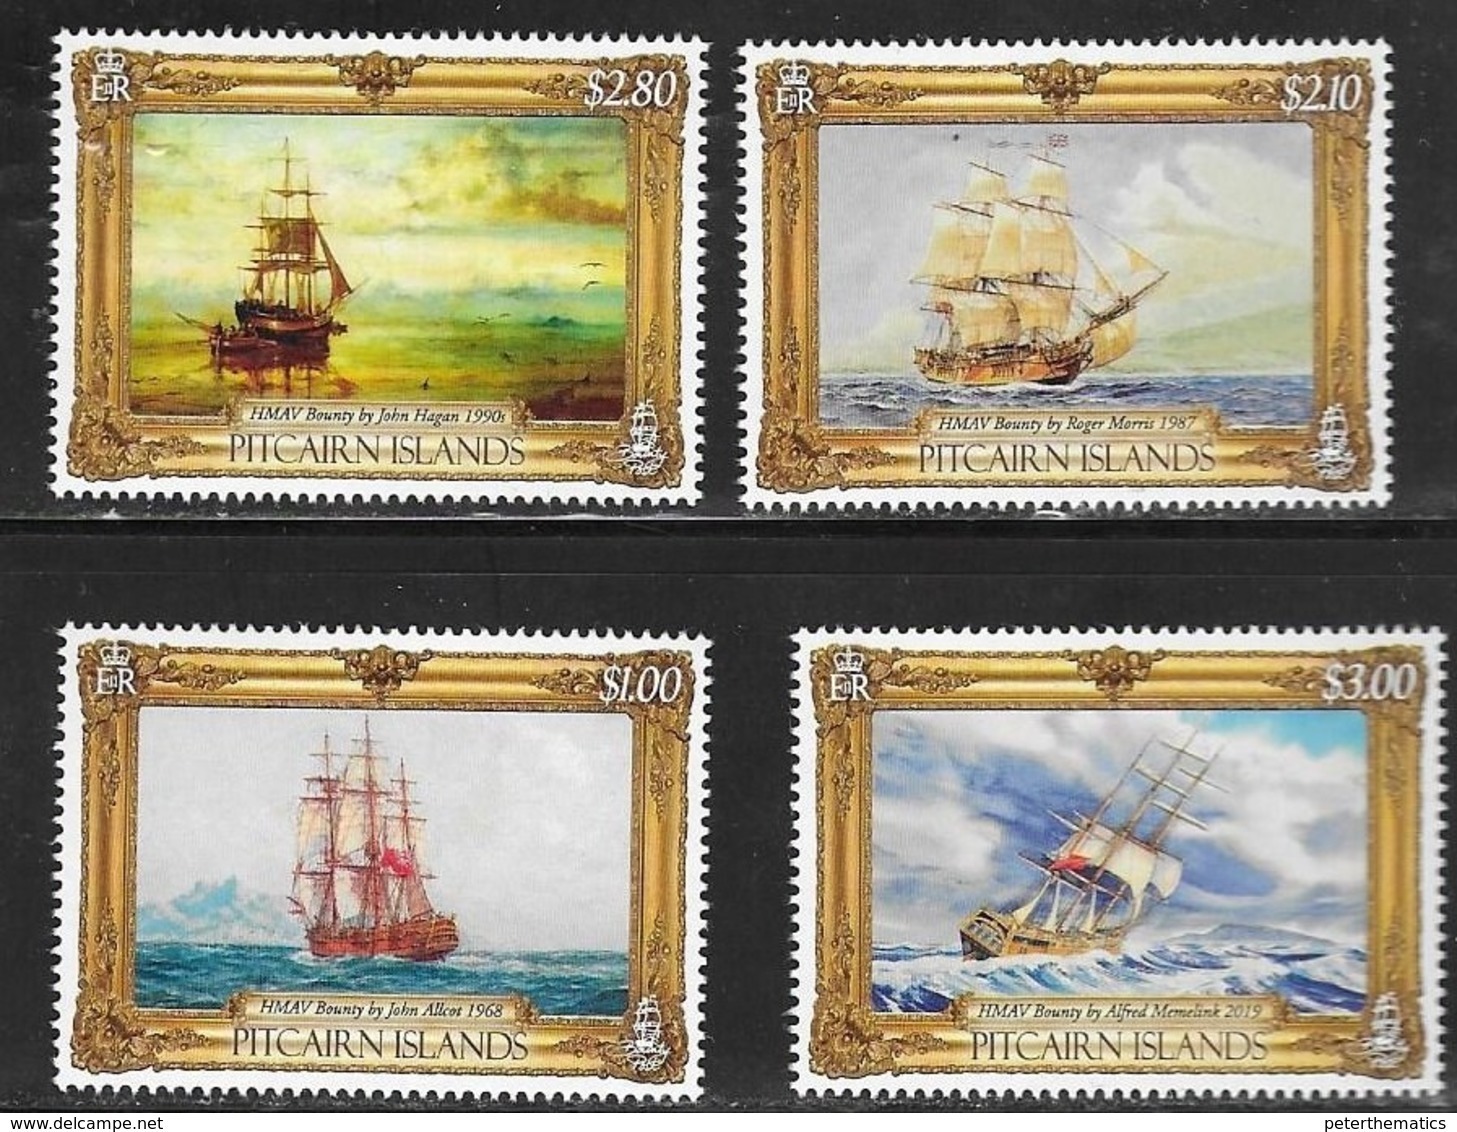 PITCAIRN ISLAND, 2019, MNH, ART, PAINTINGS OF THE BOUNTY, SHIPS, 4v - Ships